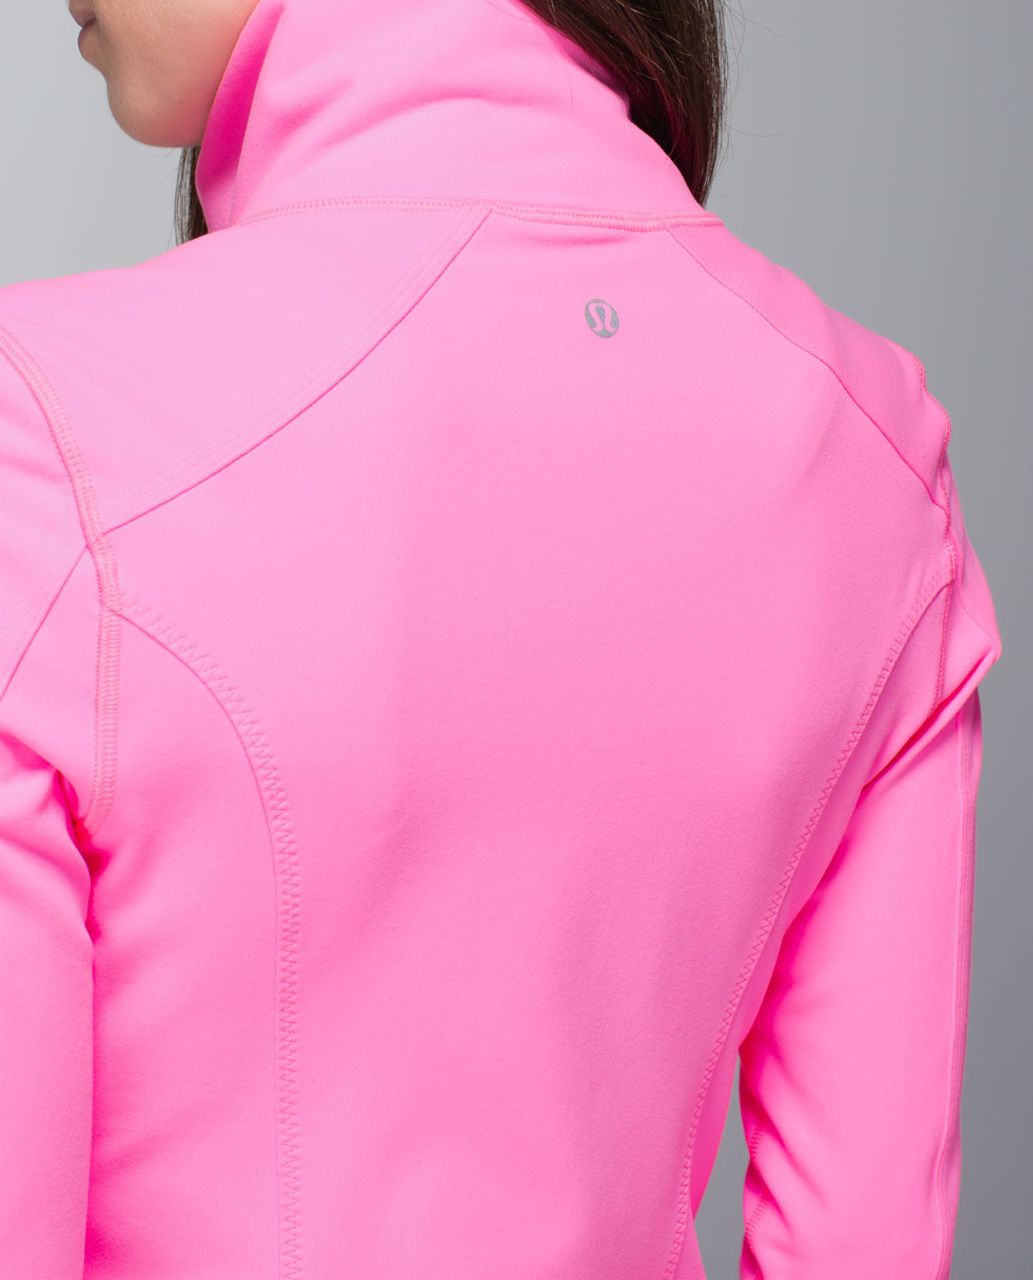 Lululemon Nice Asana Jacket - Zing Pink Light